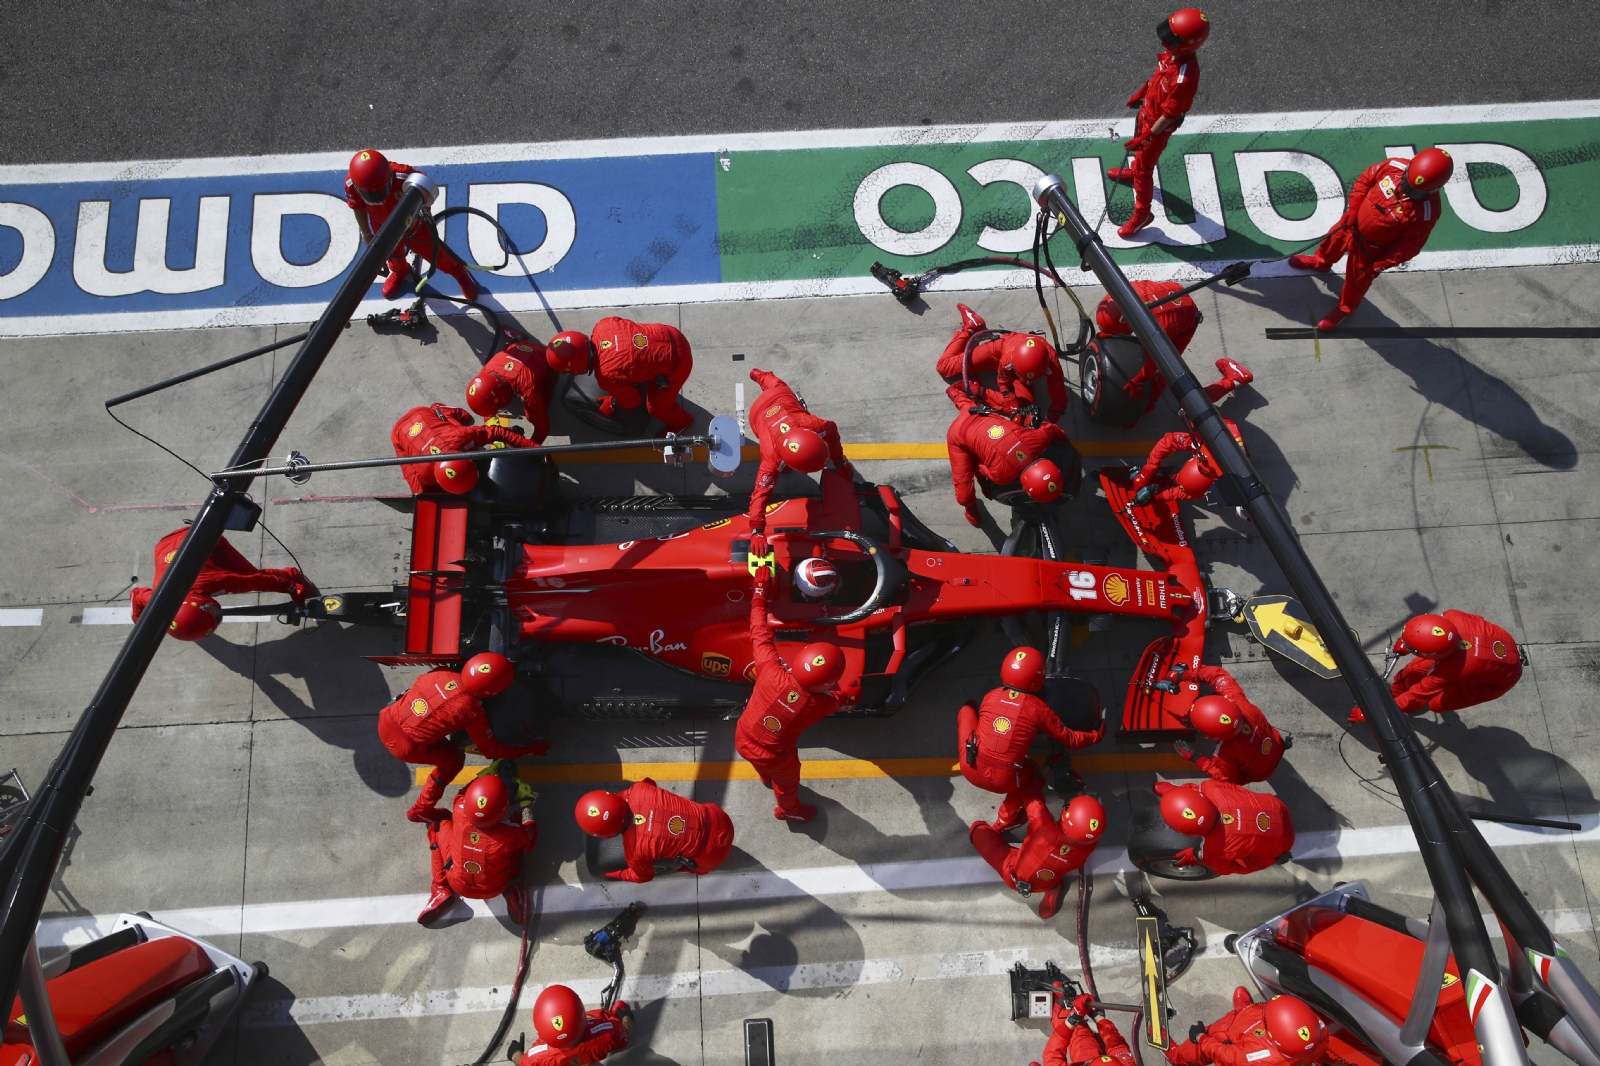 F1: Charles Leclerc, ileso tras fuerte choque en Gran Premio de Italia (VIDEO)